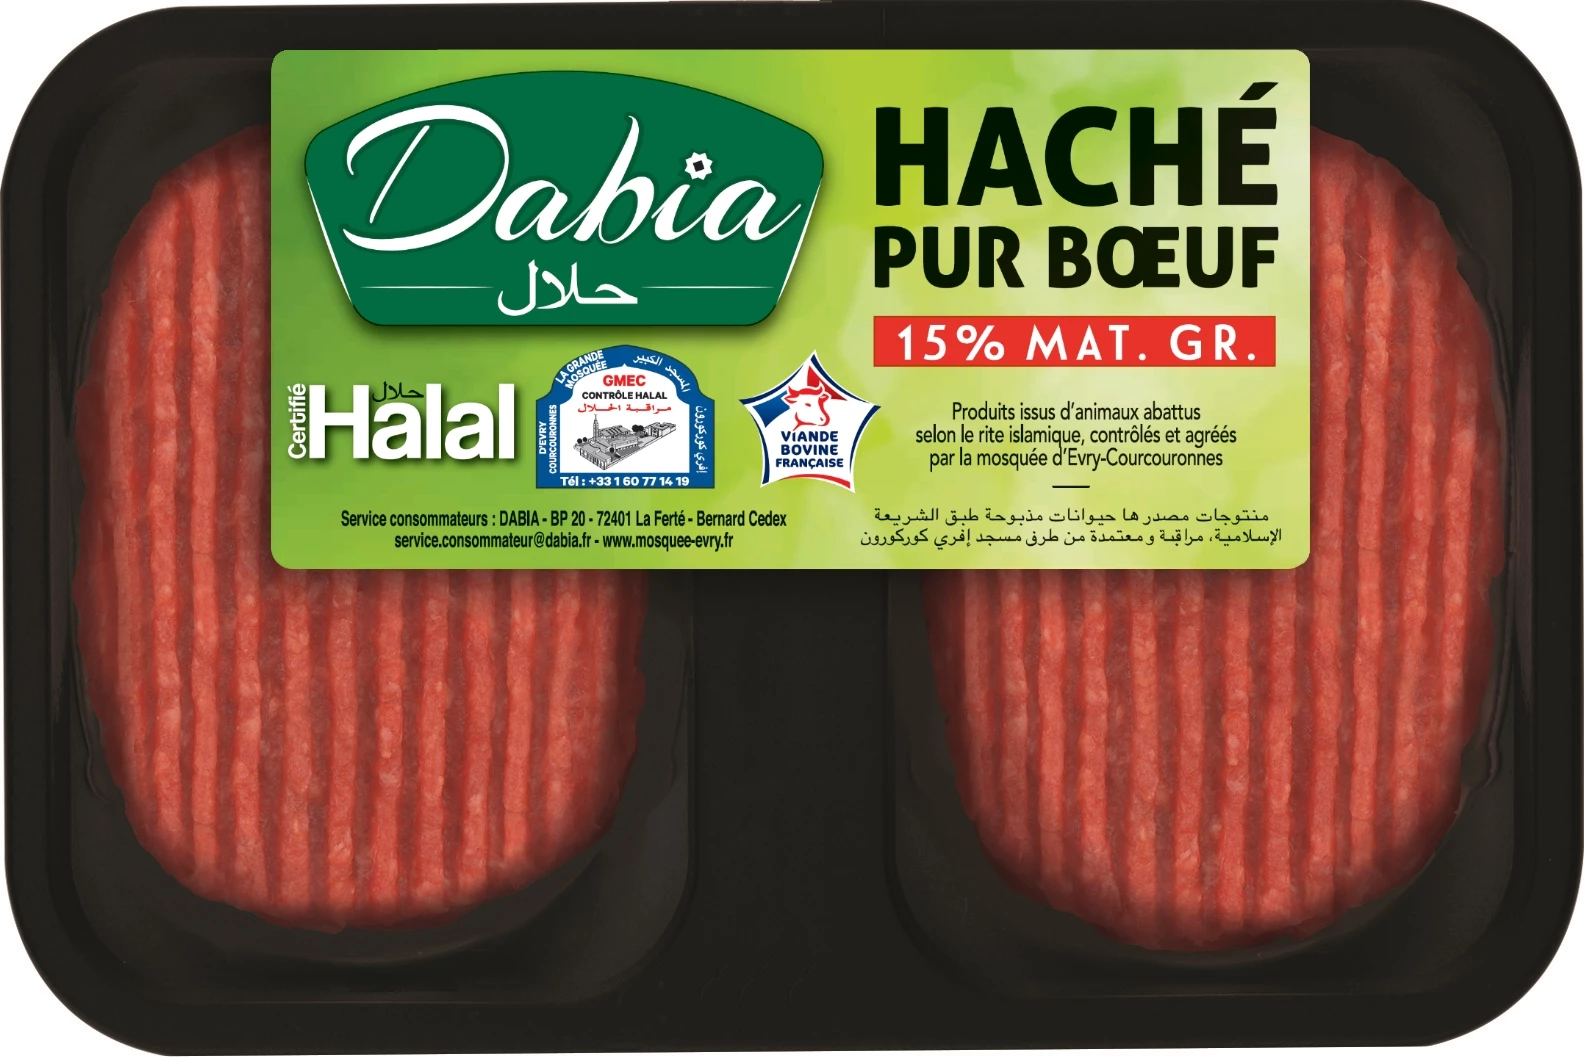 Halal S Hache 15 Mg 2x125g